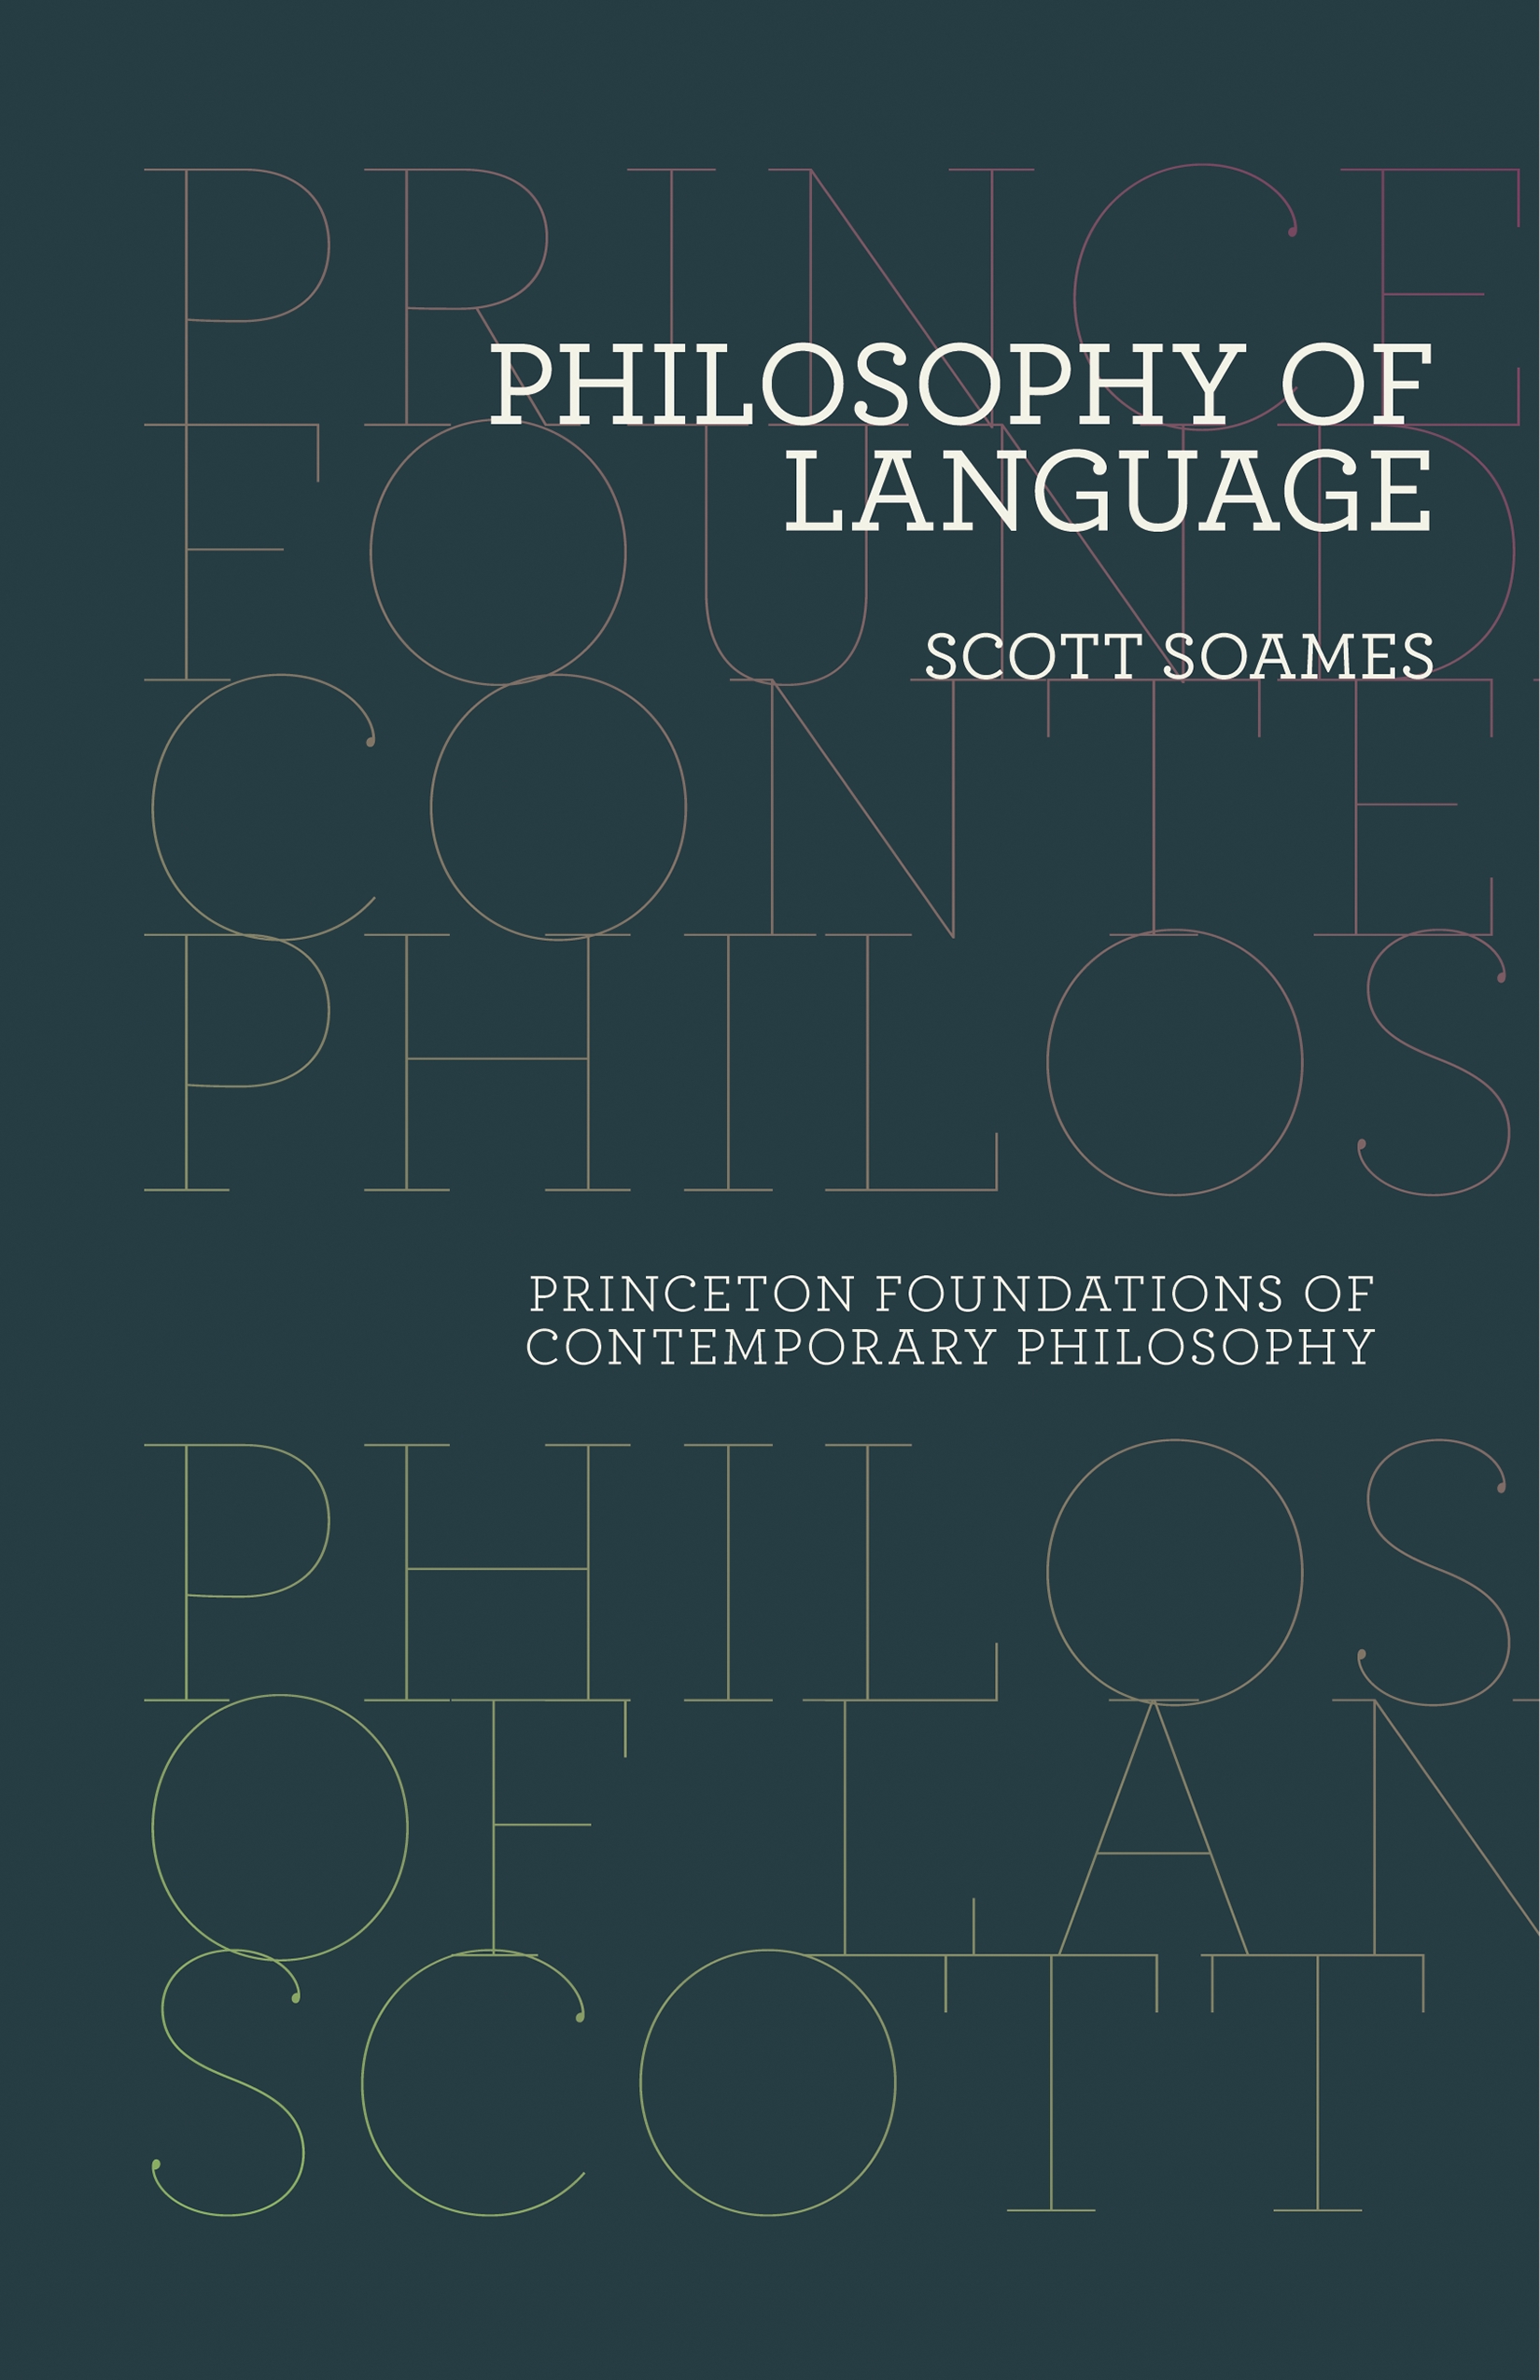 Philosophy of Language | Princeton University Press